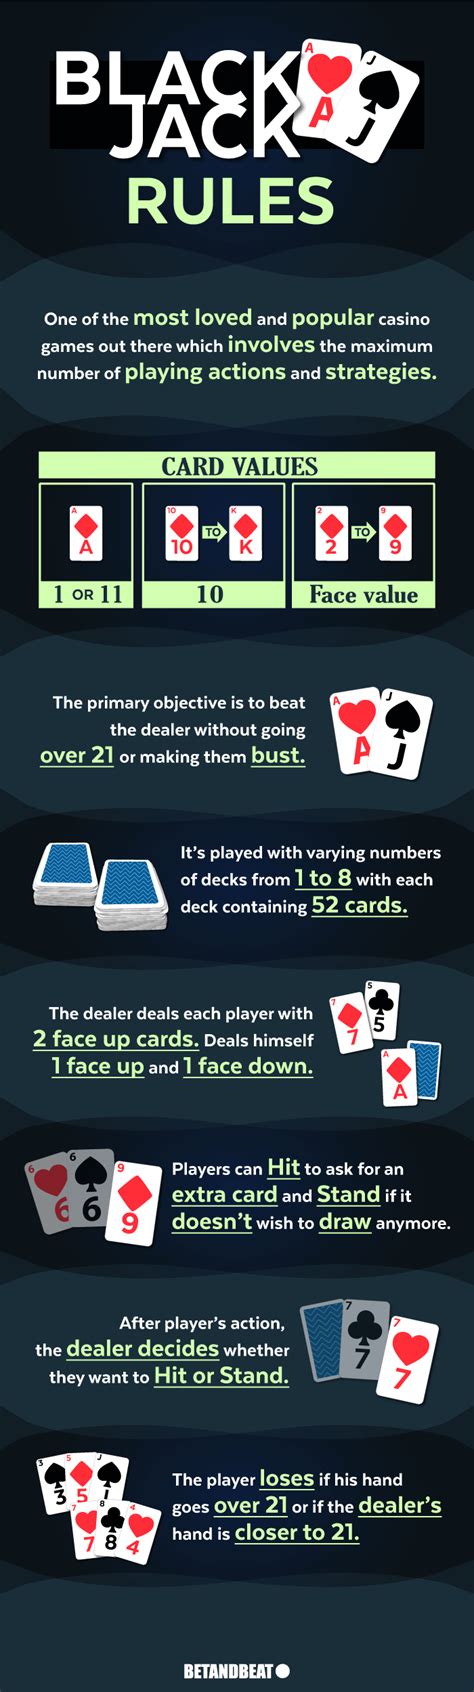 blackjack card games rules/